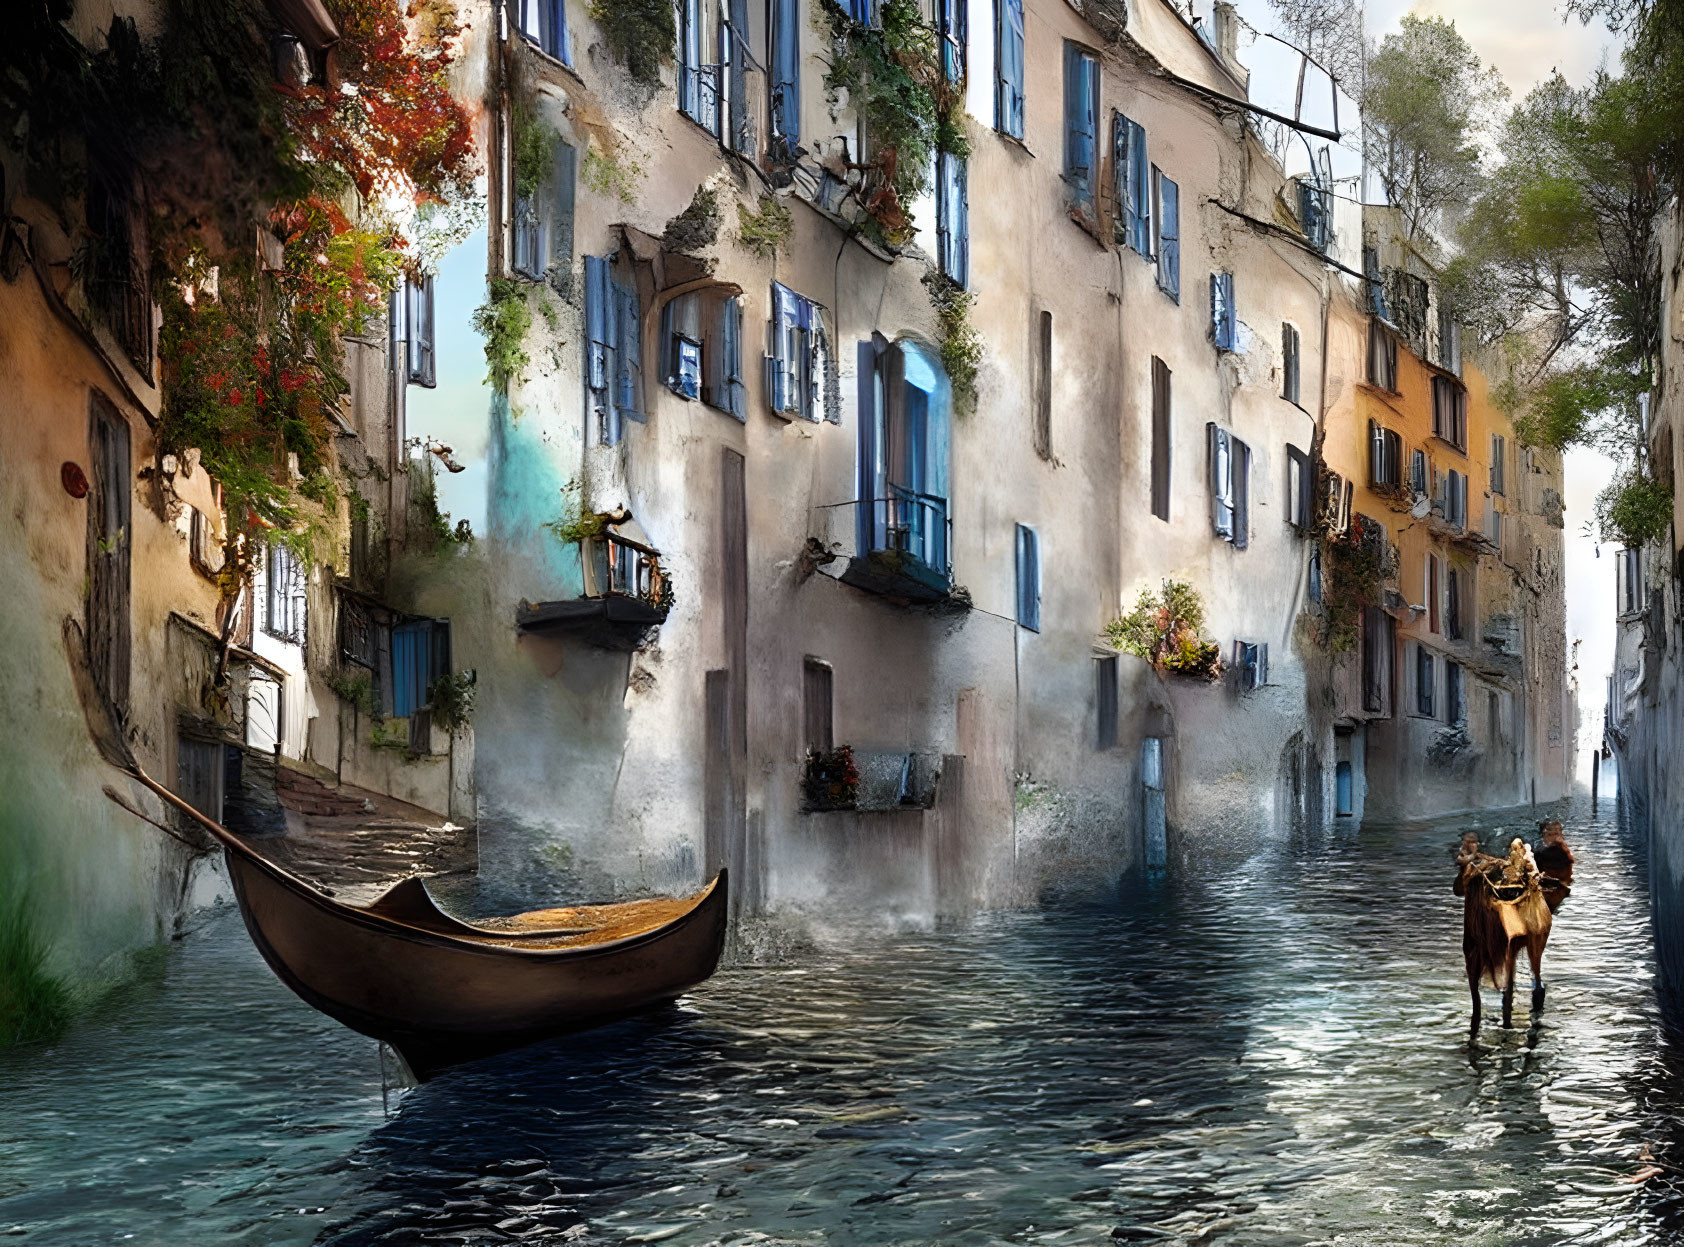 Surreal artwork: gondola, camel, water street, quaint buildings